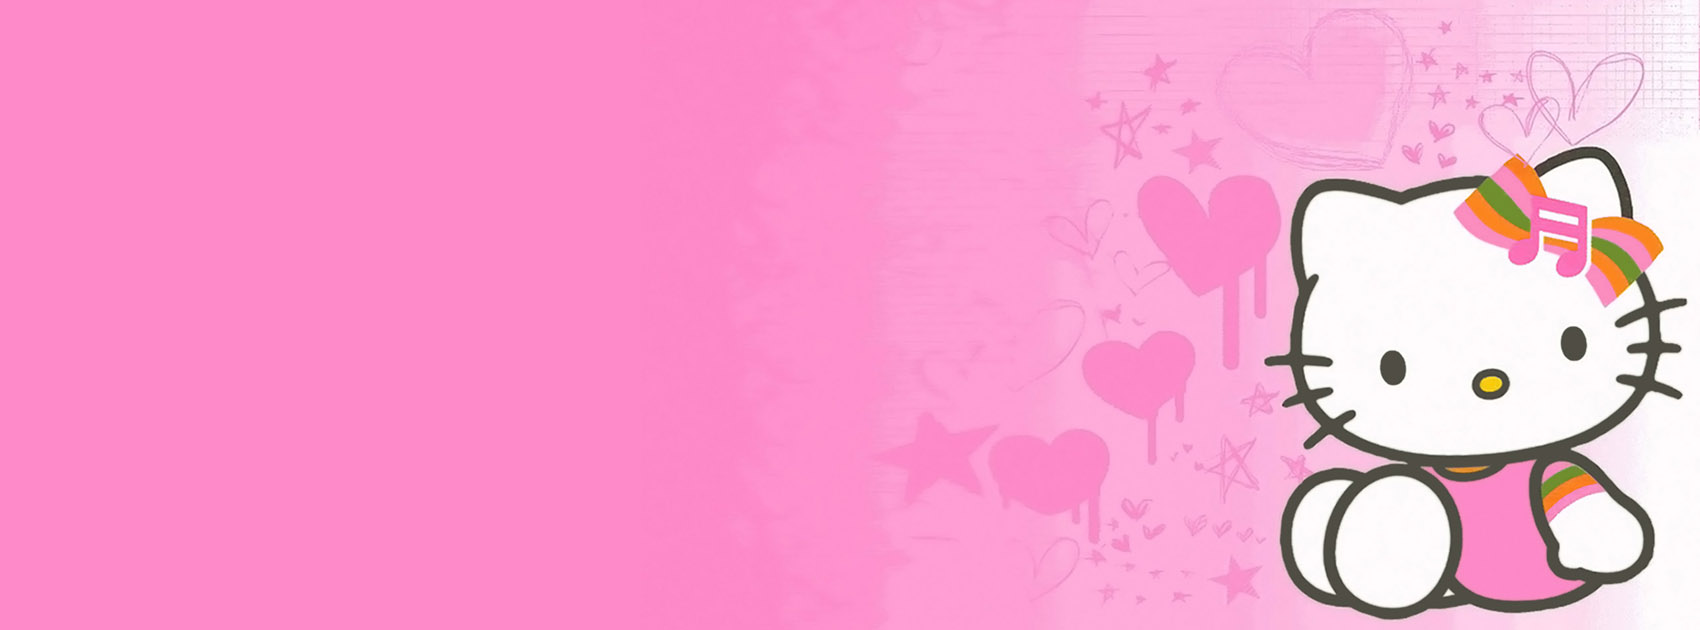 Hello Kitty Valentine Facebook Timeline Cover Photo